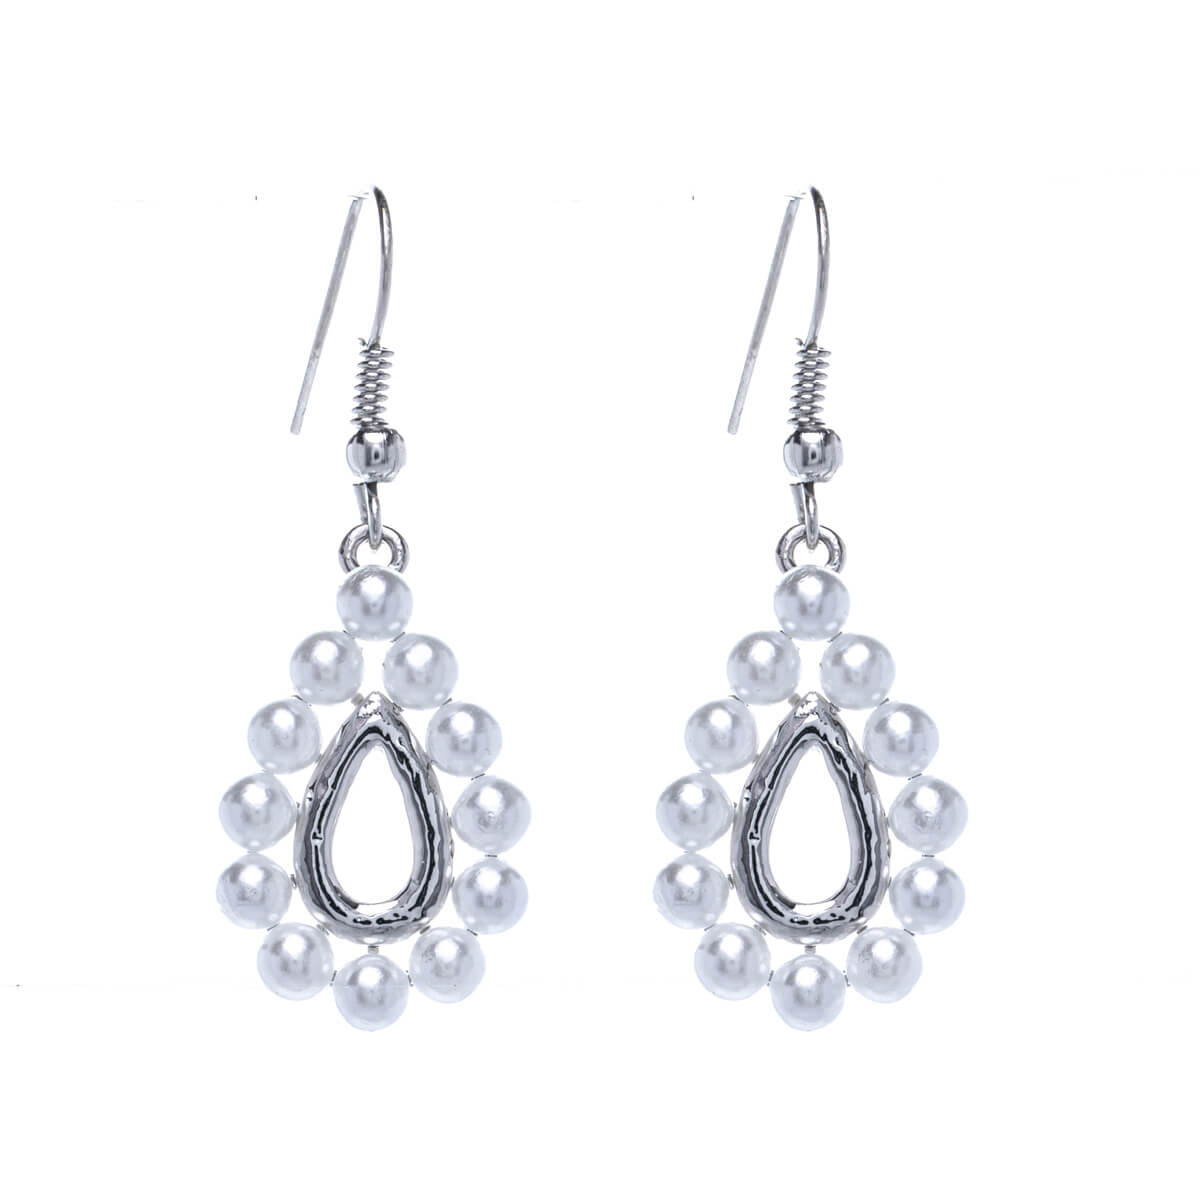 Hanging teardrop shaped pearl earrings